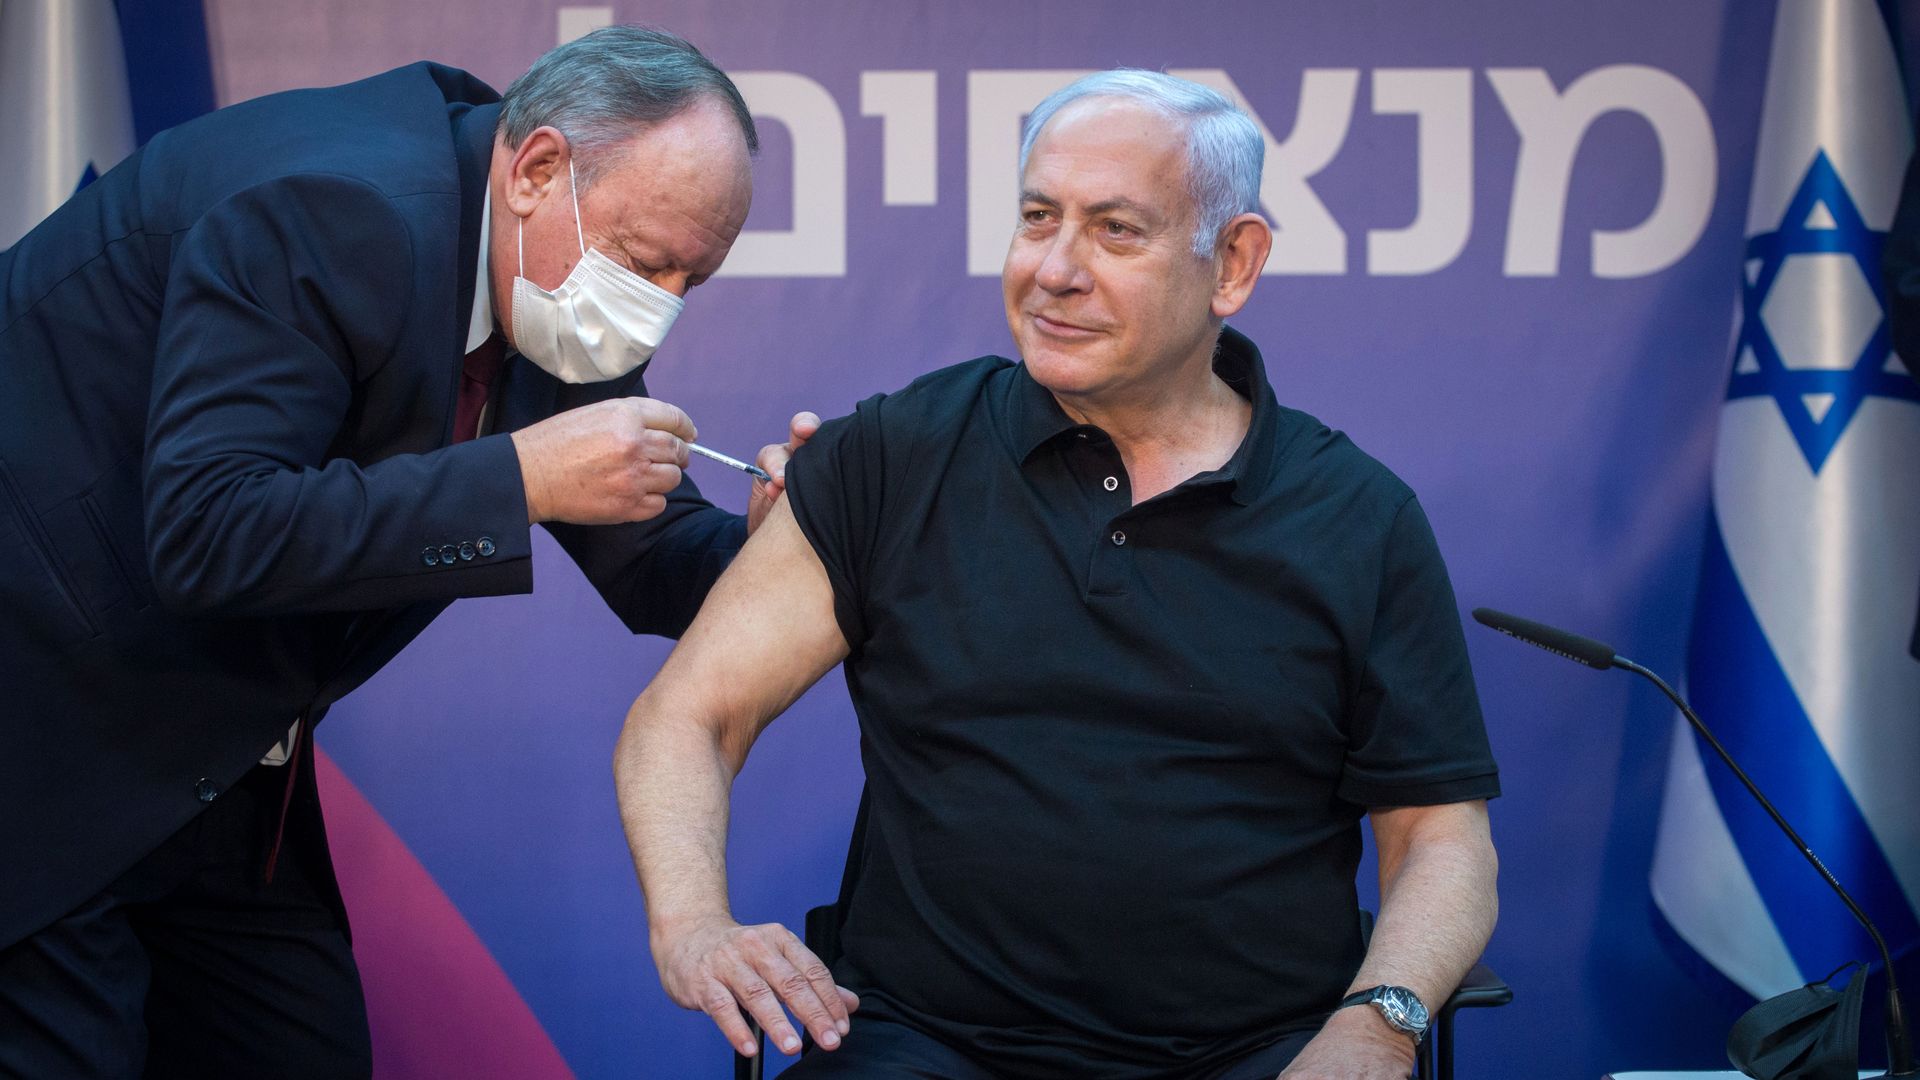 Netanyahu receiving the covid vaccine.